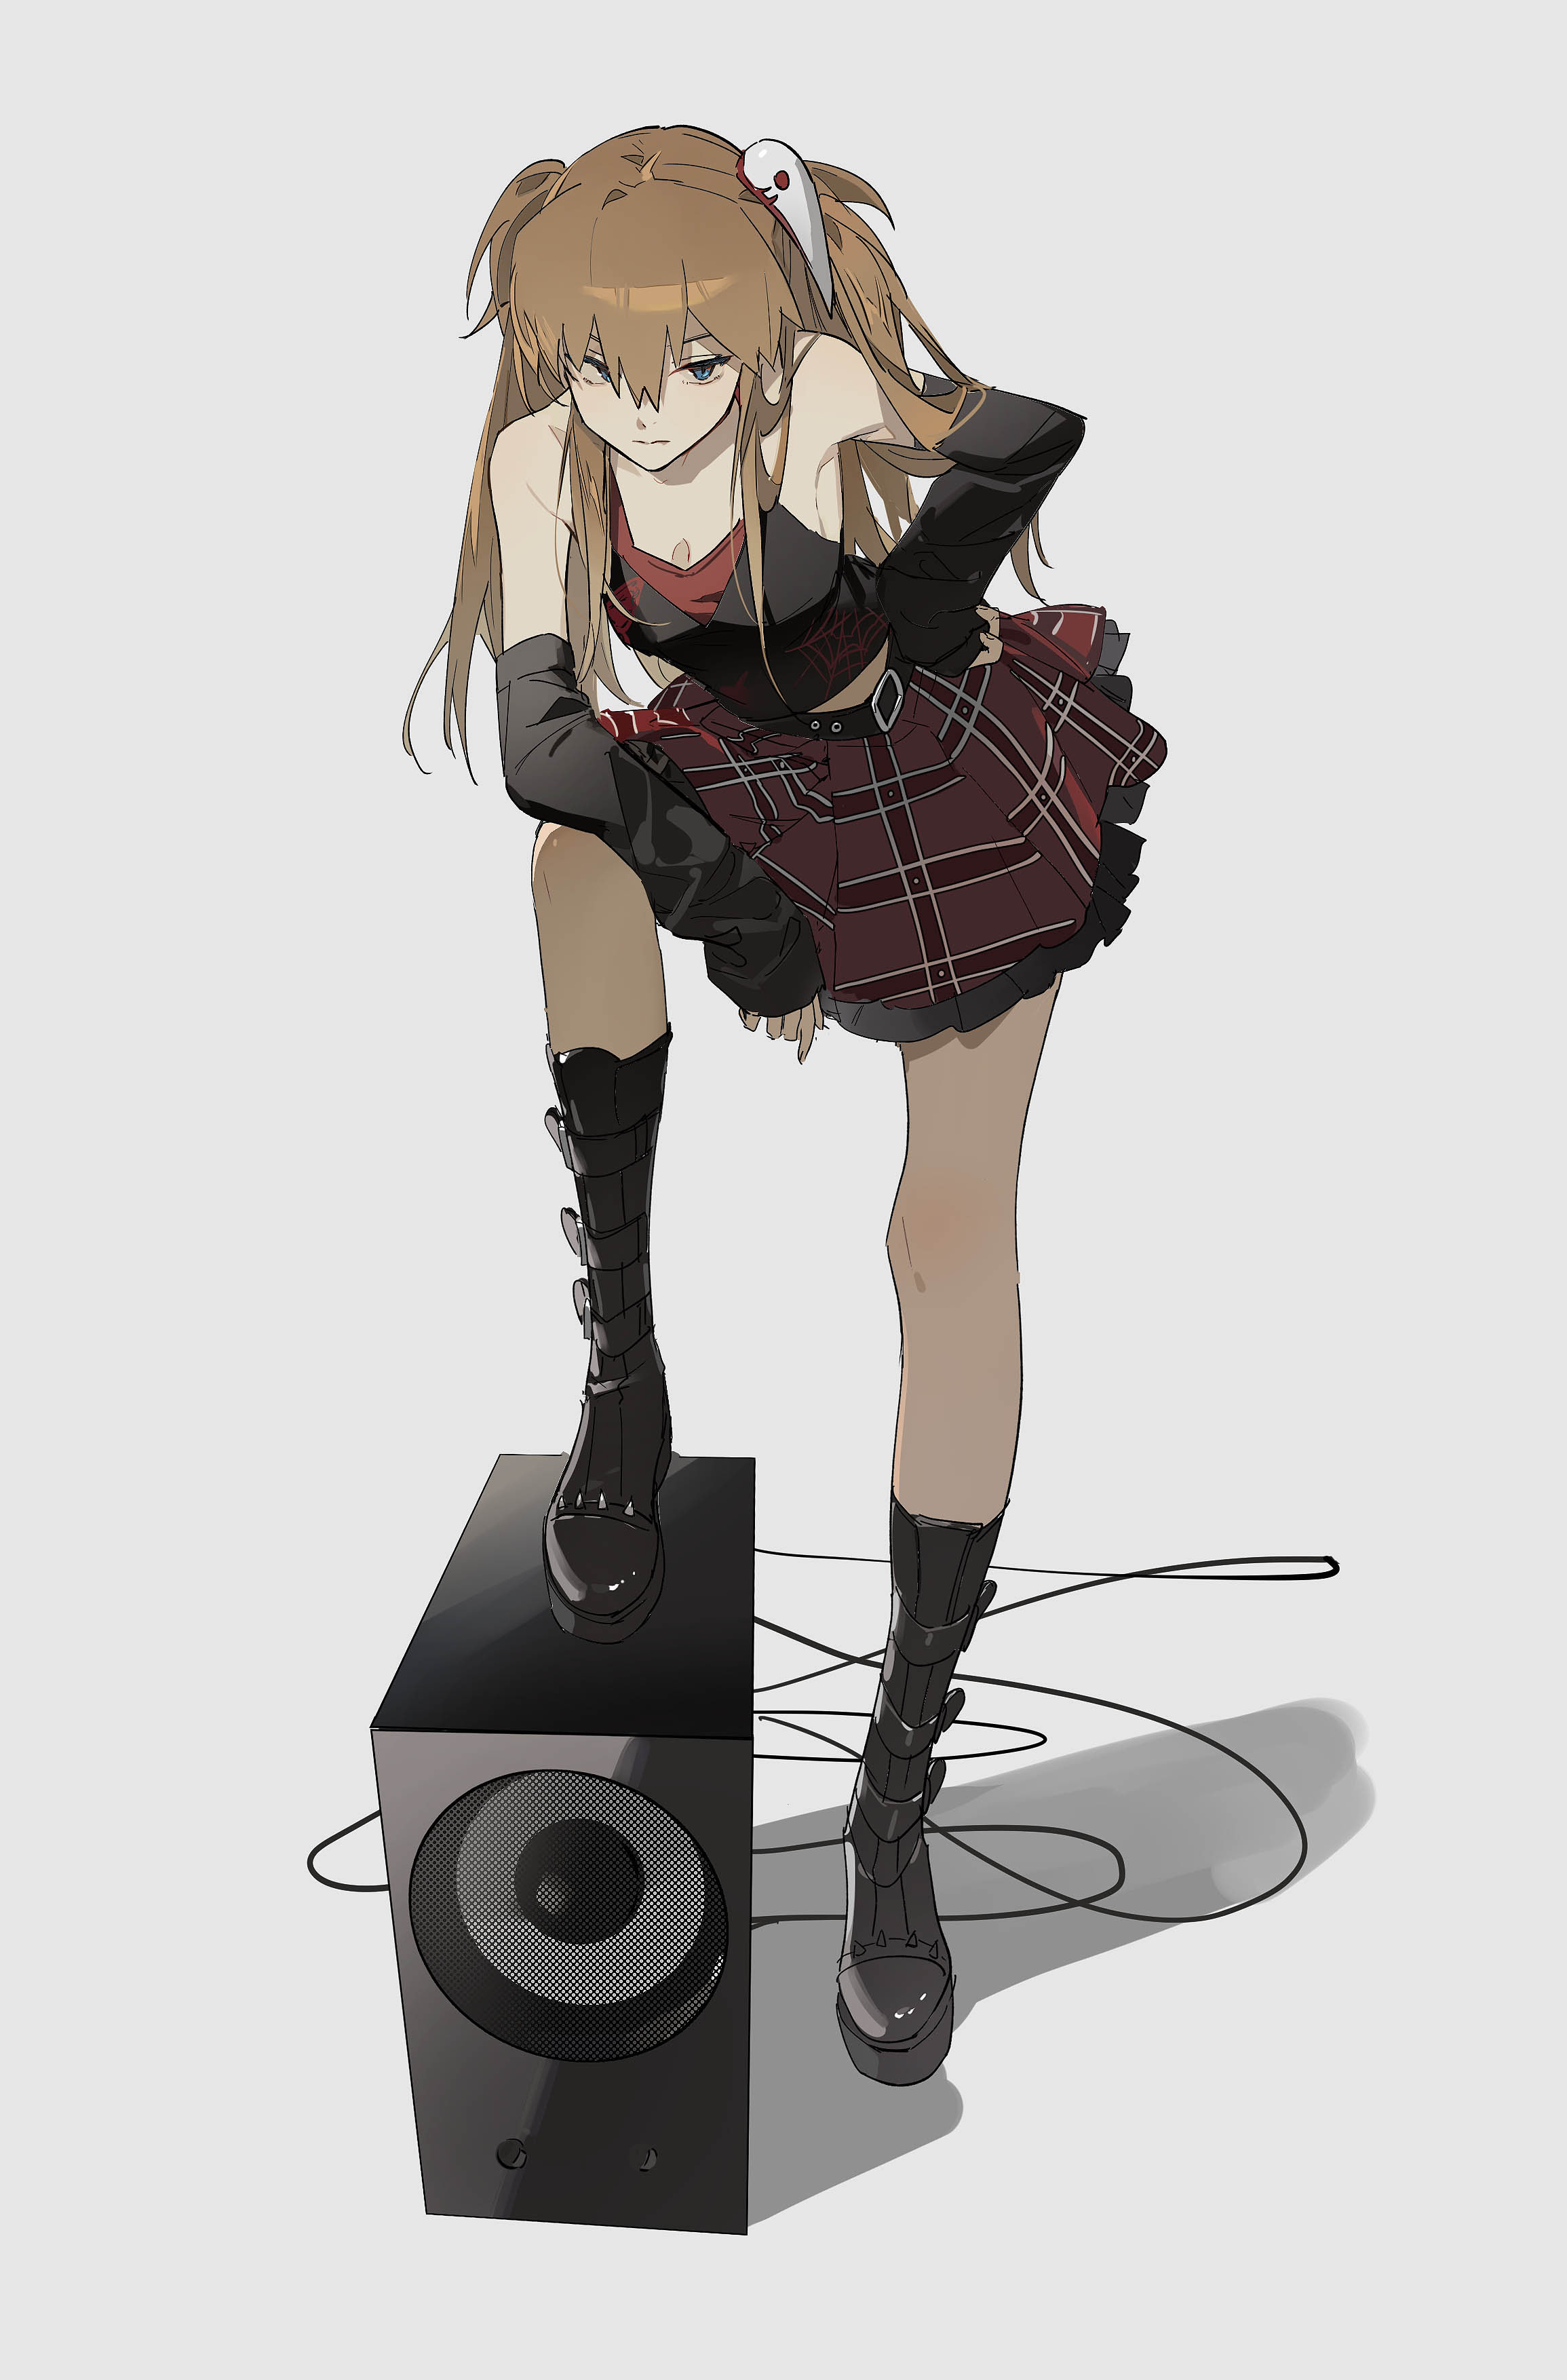 Anime 2310x3508 Neon Genesis Evangelion Asuka Langley Soryu boots miniskirt speakers detached sleeves portrait display anime girls